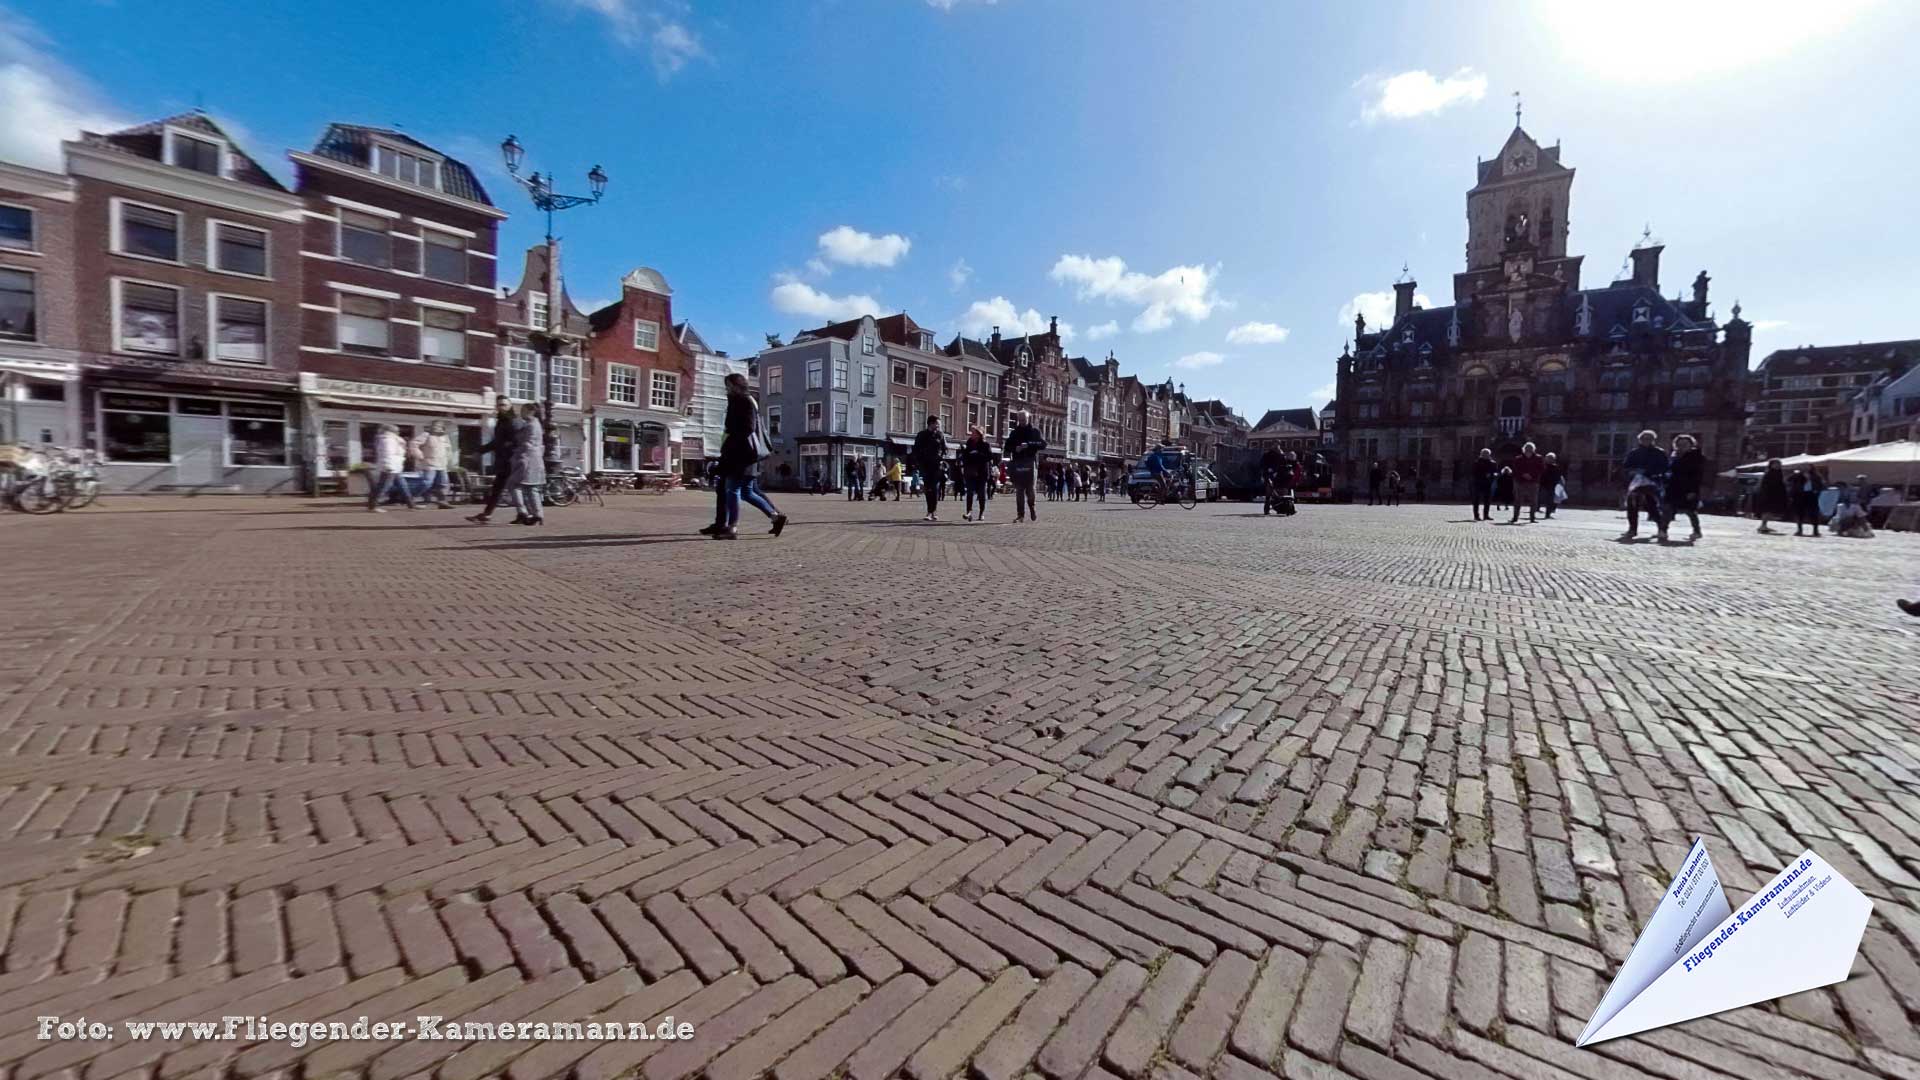 Nieuwe Kerk, Market, Stadhuis in Delft (NL) - 360°-Panorama